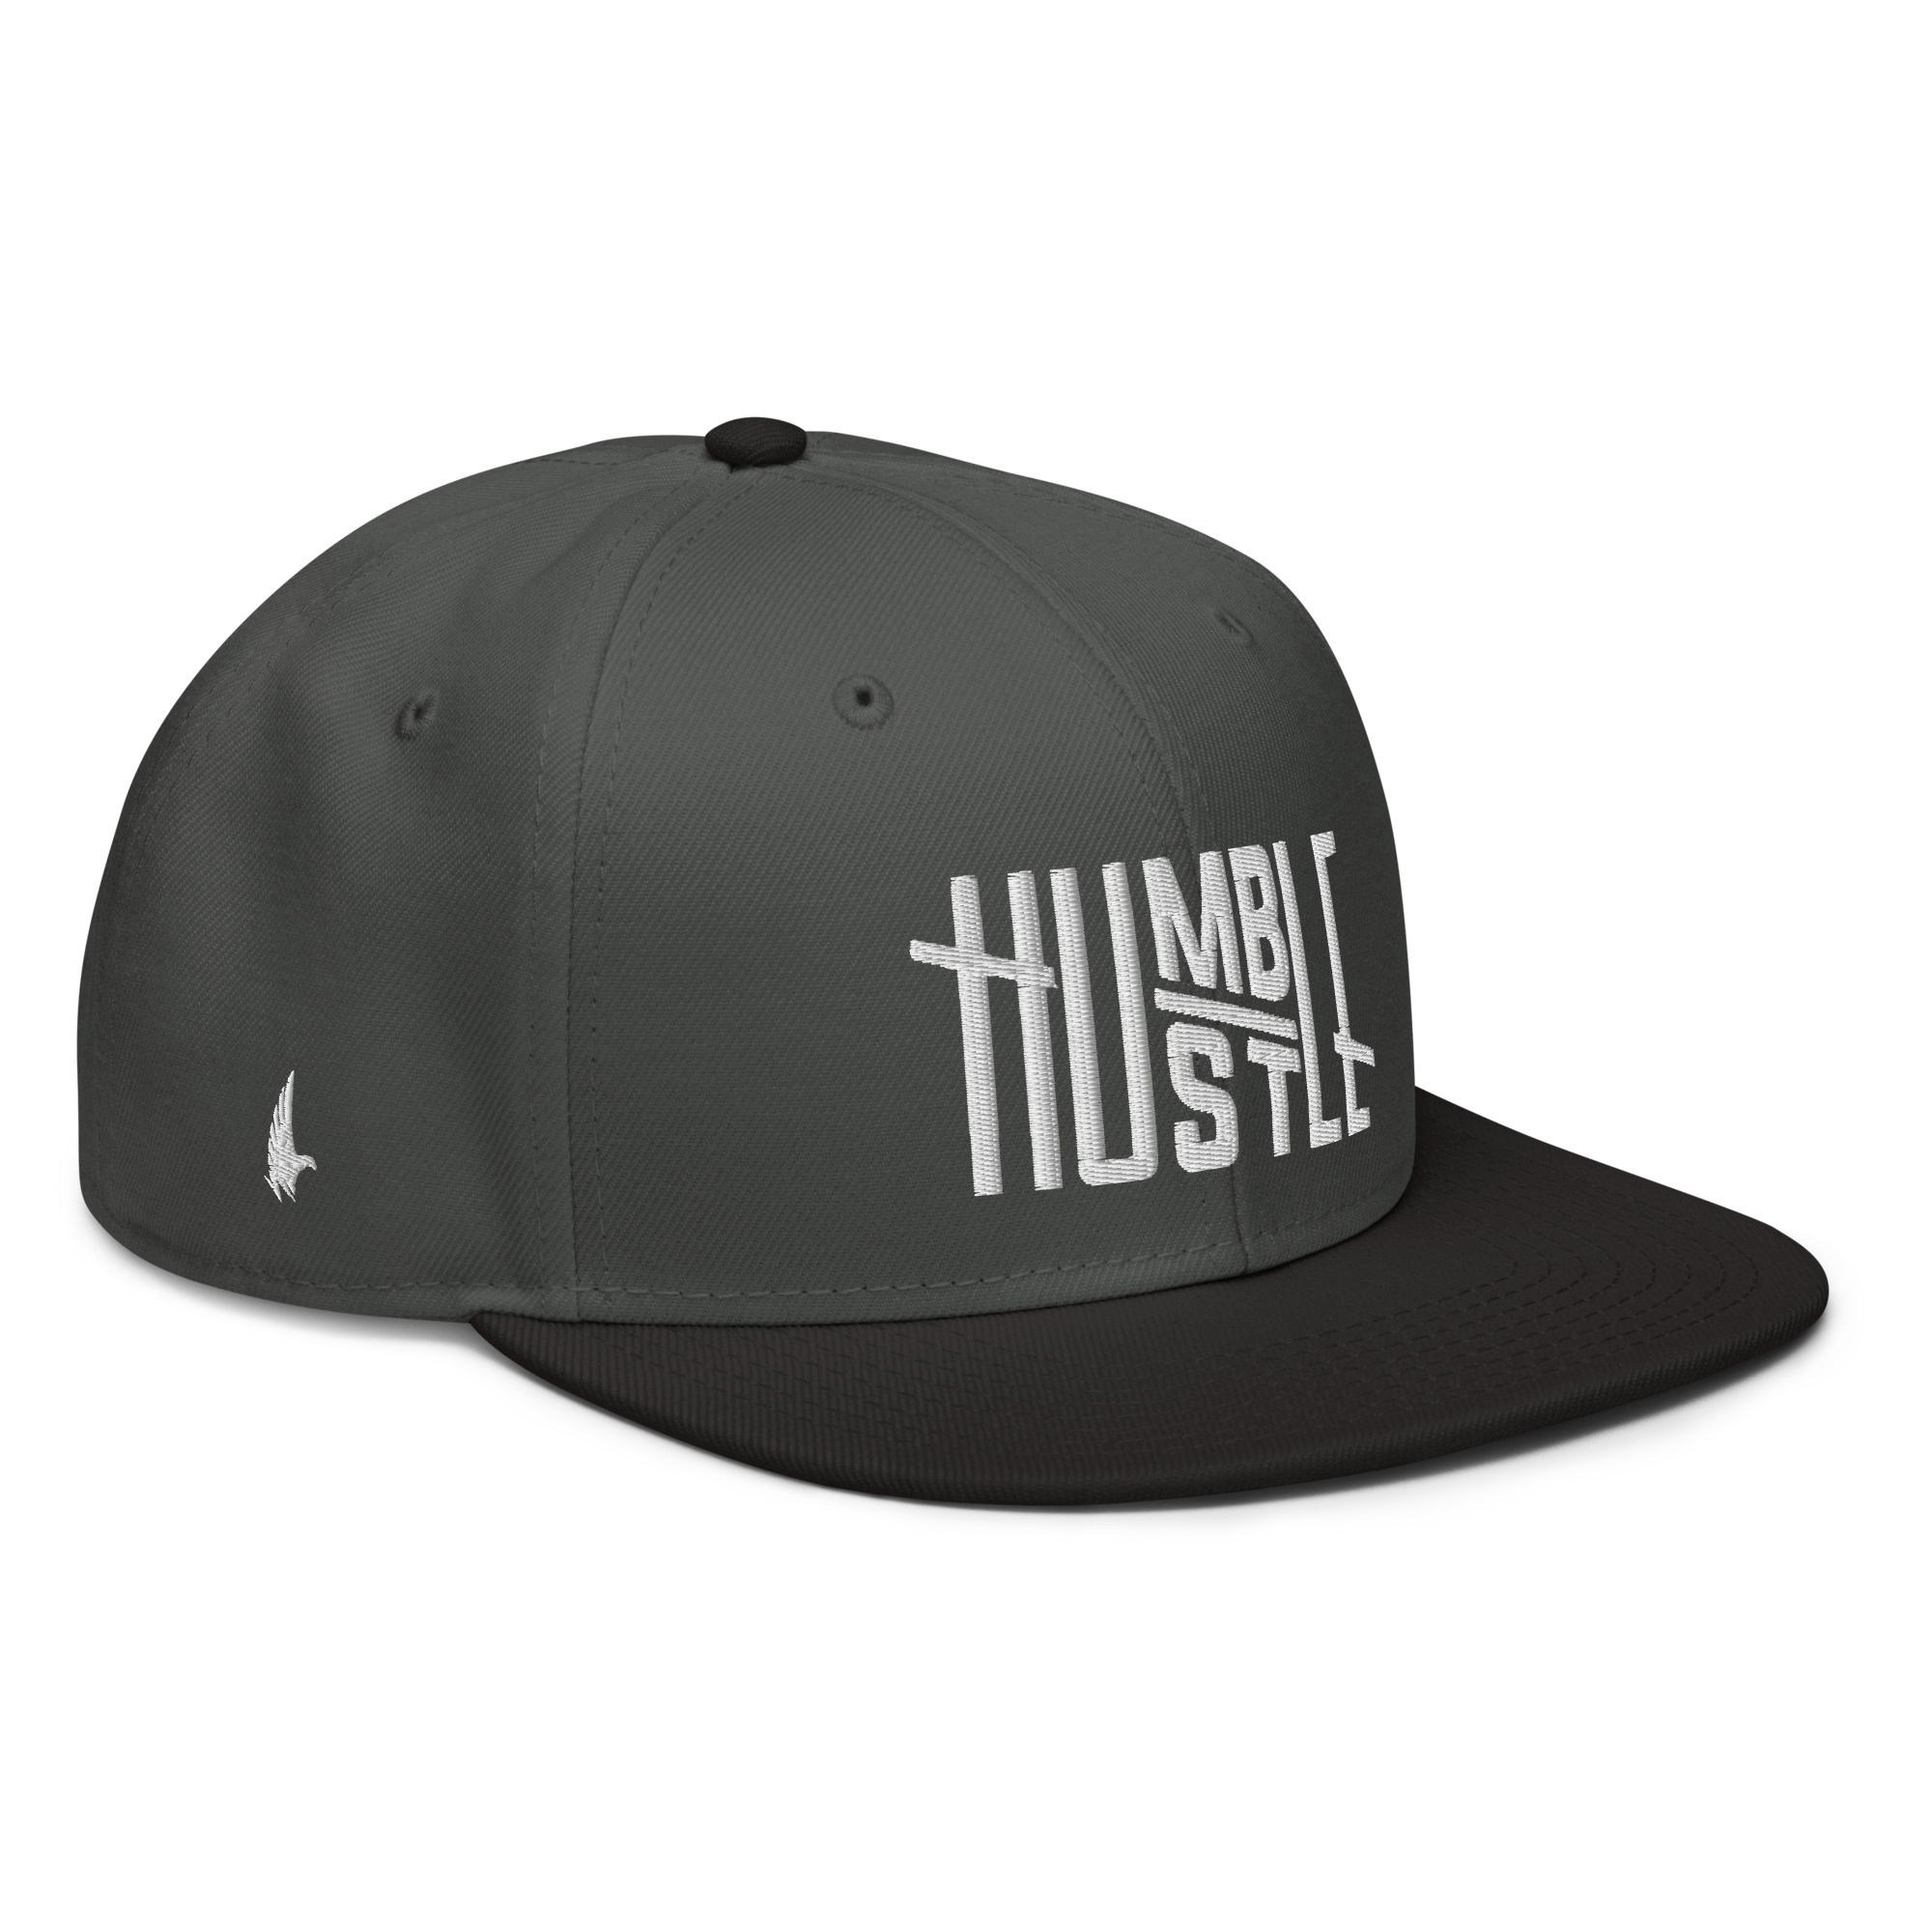 Humble Hustle Snapback Hat - Charcoal Gray/White/Black OS - Loyalty Vibes